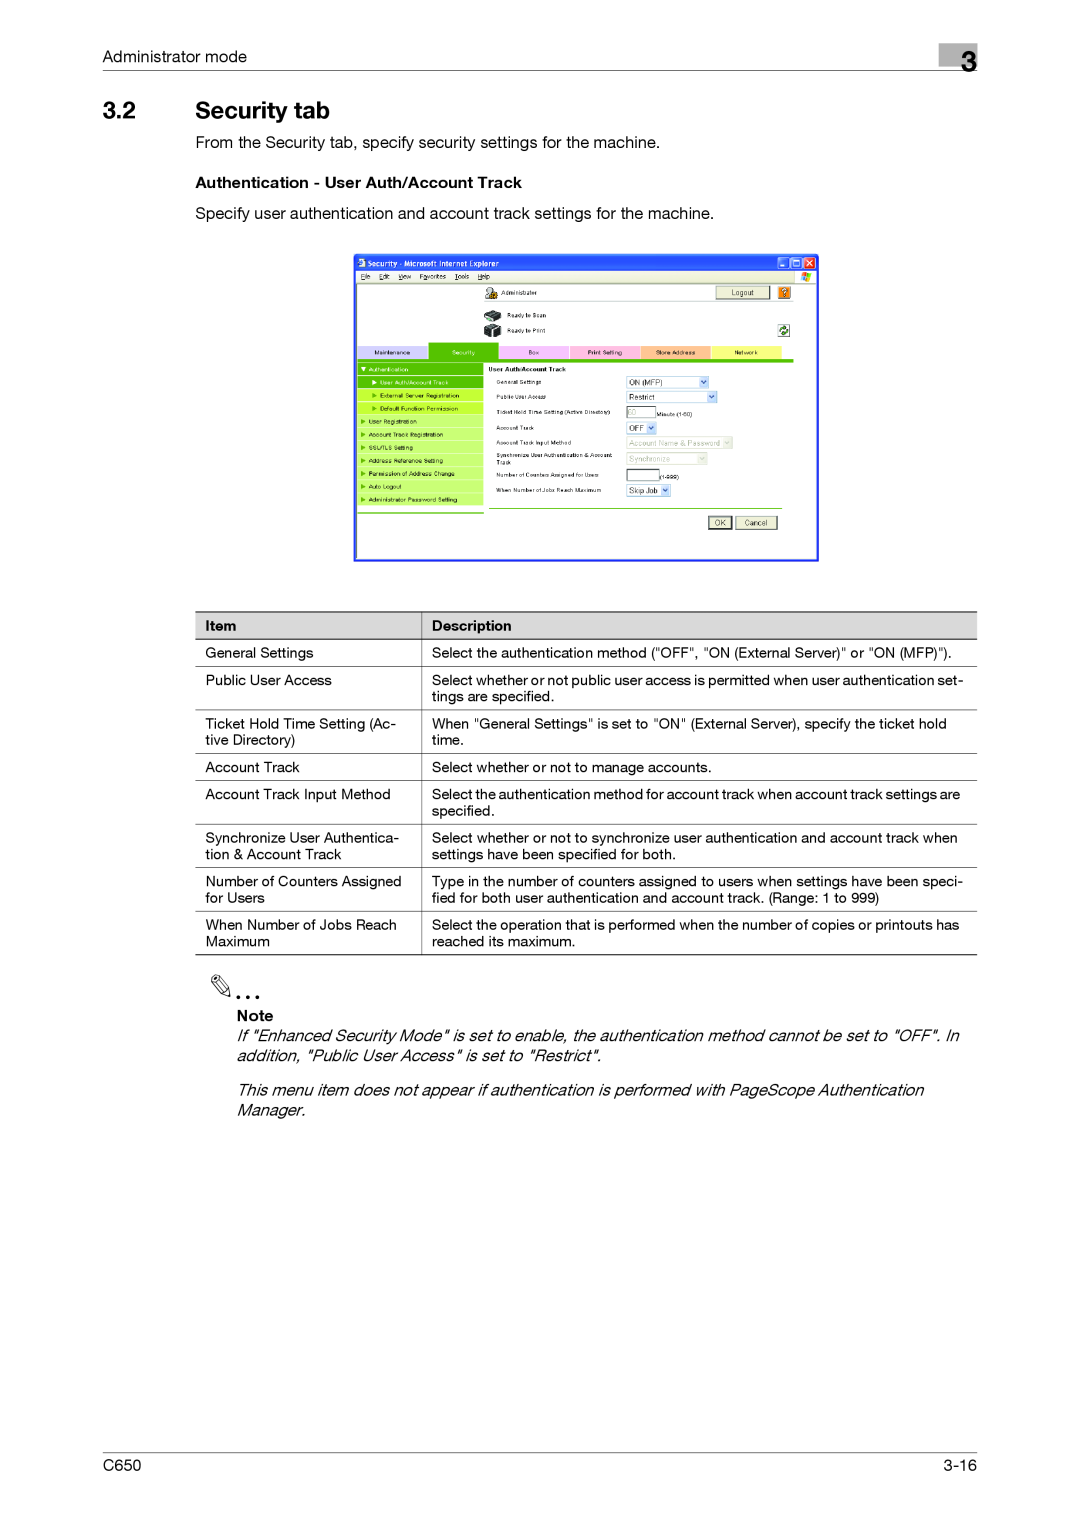 Konica Minolta C650 manual 3.2Security tab, Authentication - User Auth/Account Track 